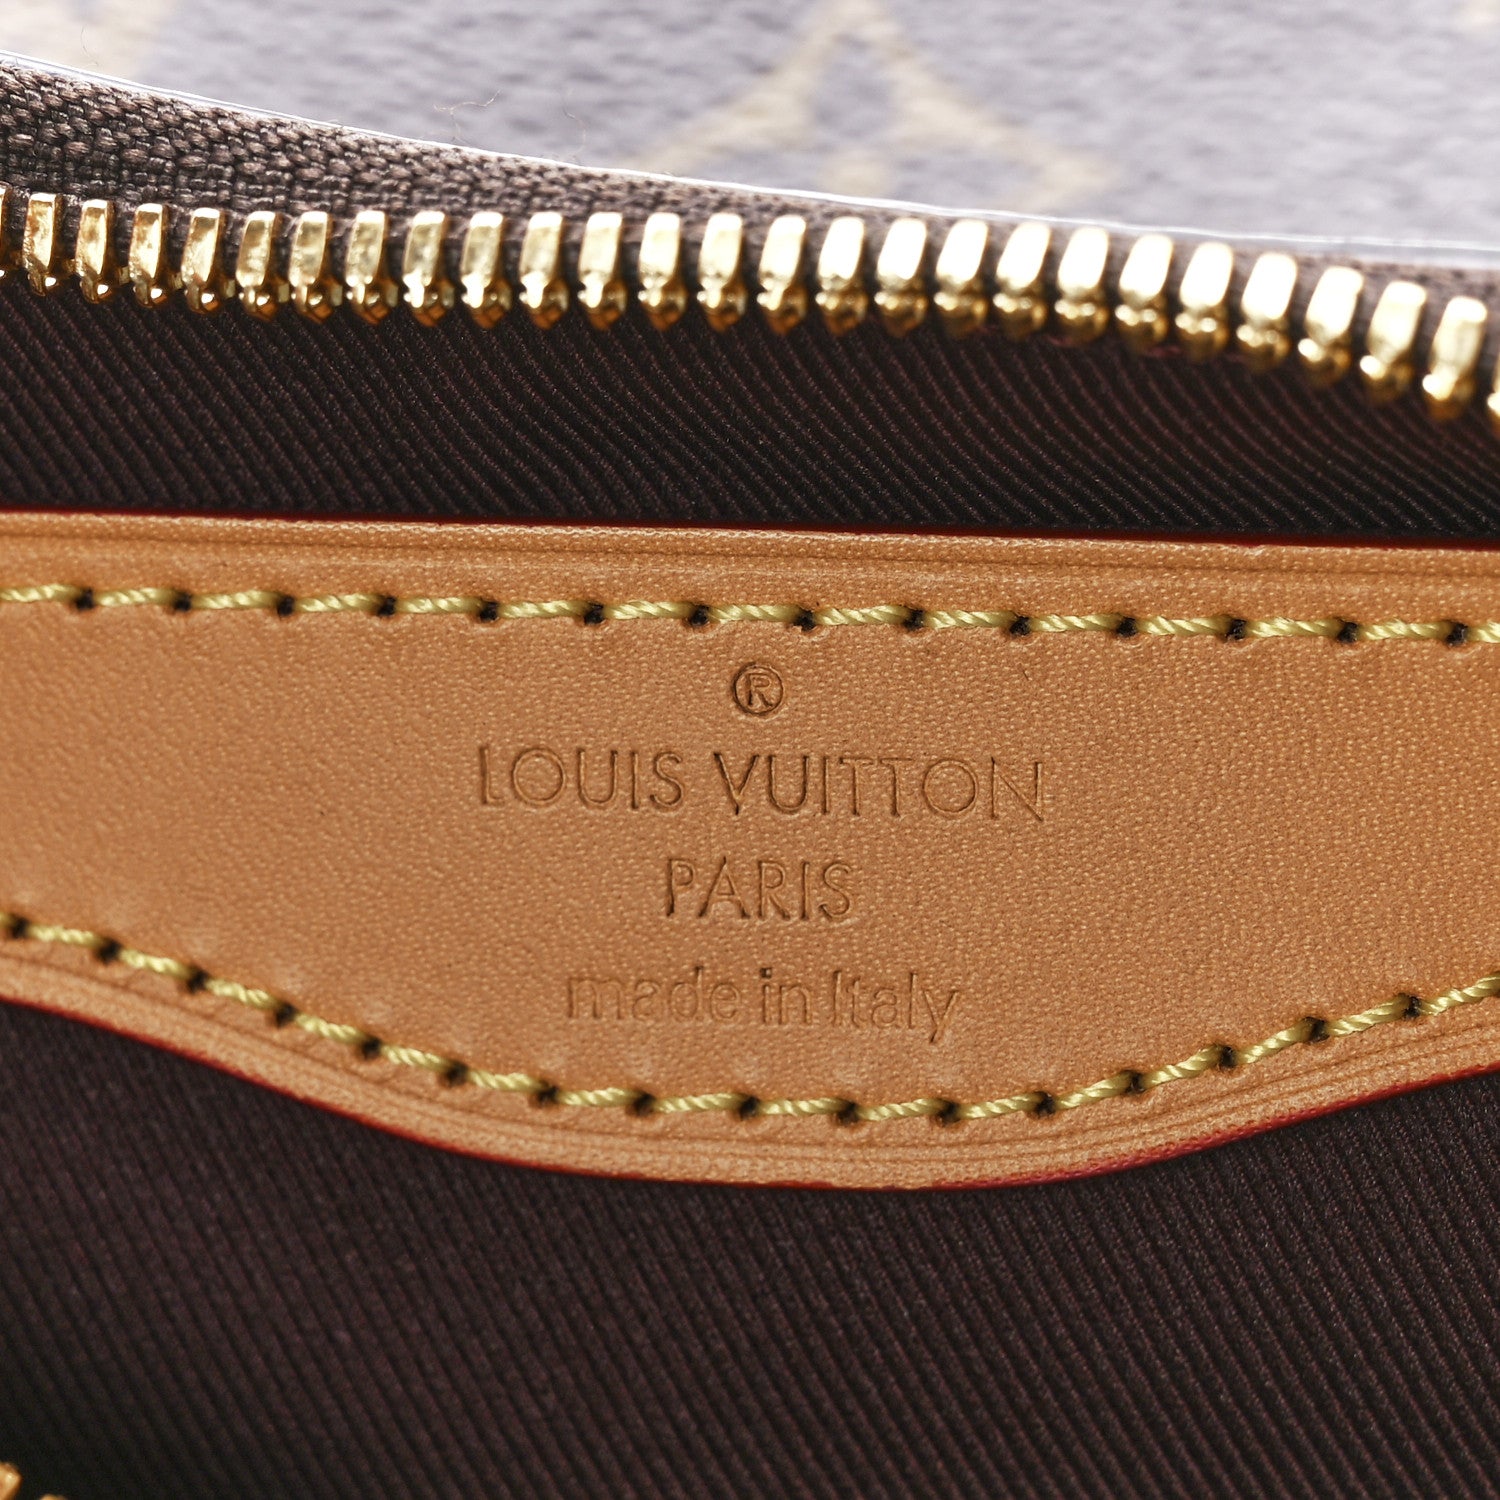 Louis Vuitton Boulogne NM in Monogram & Natural Calfskin - SOLD